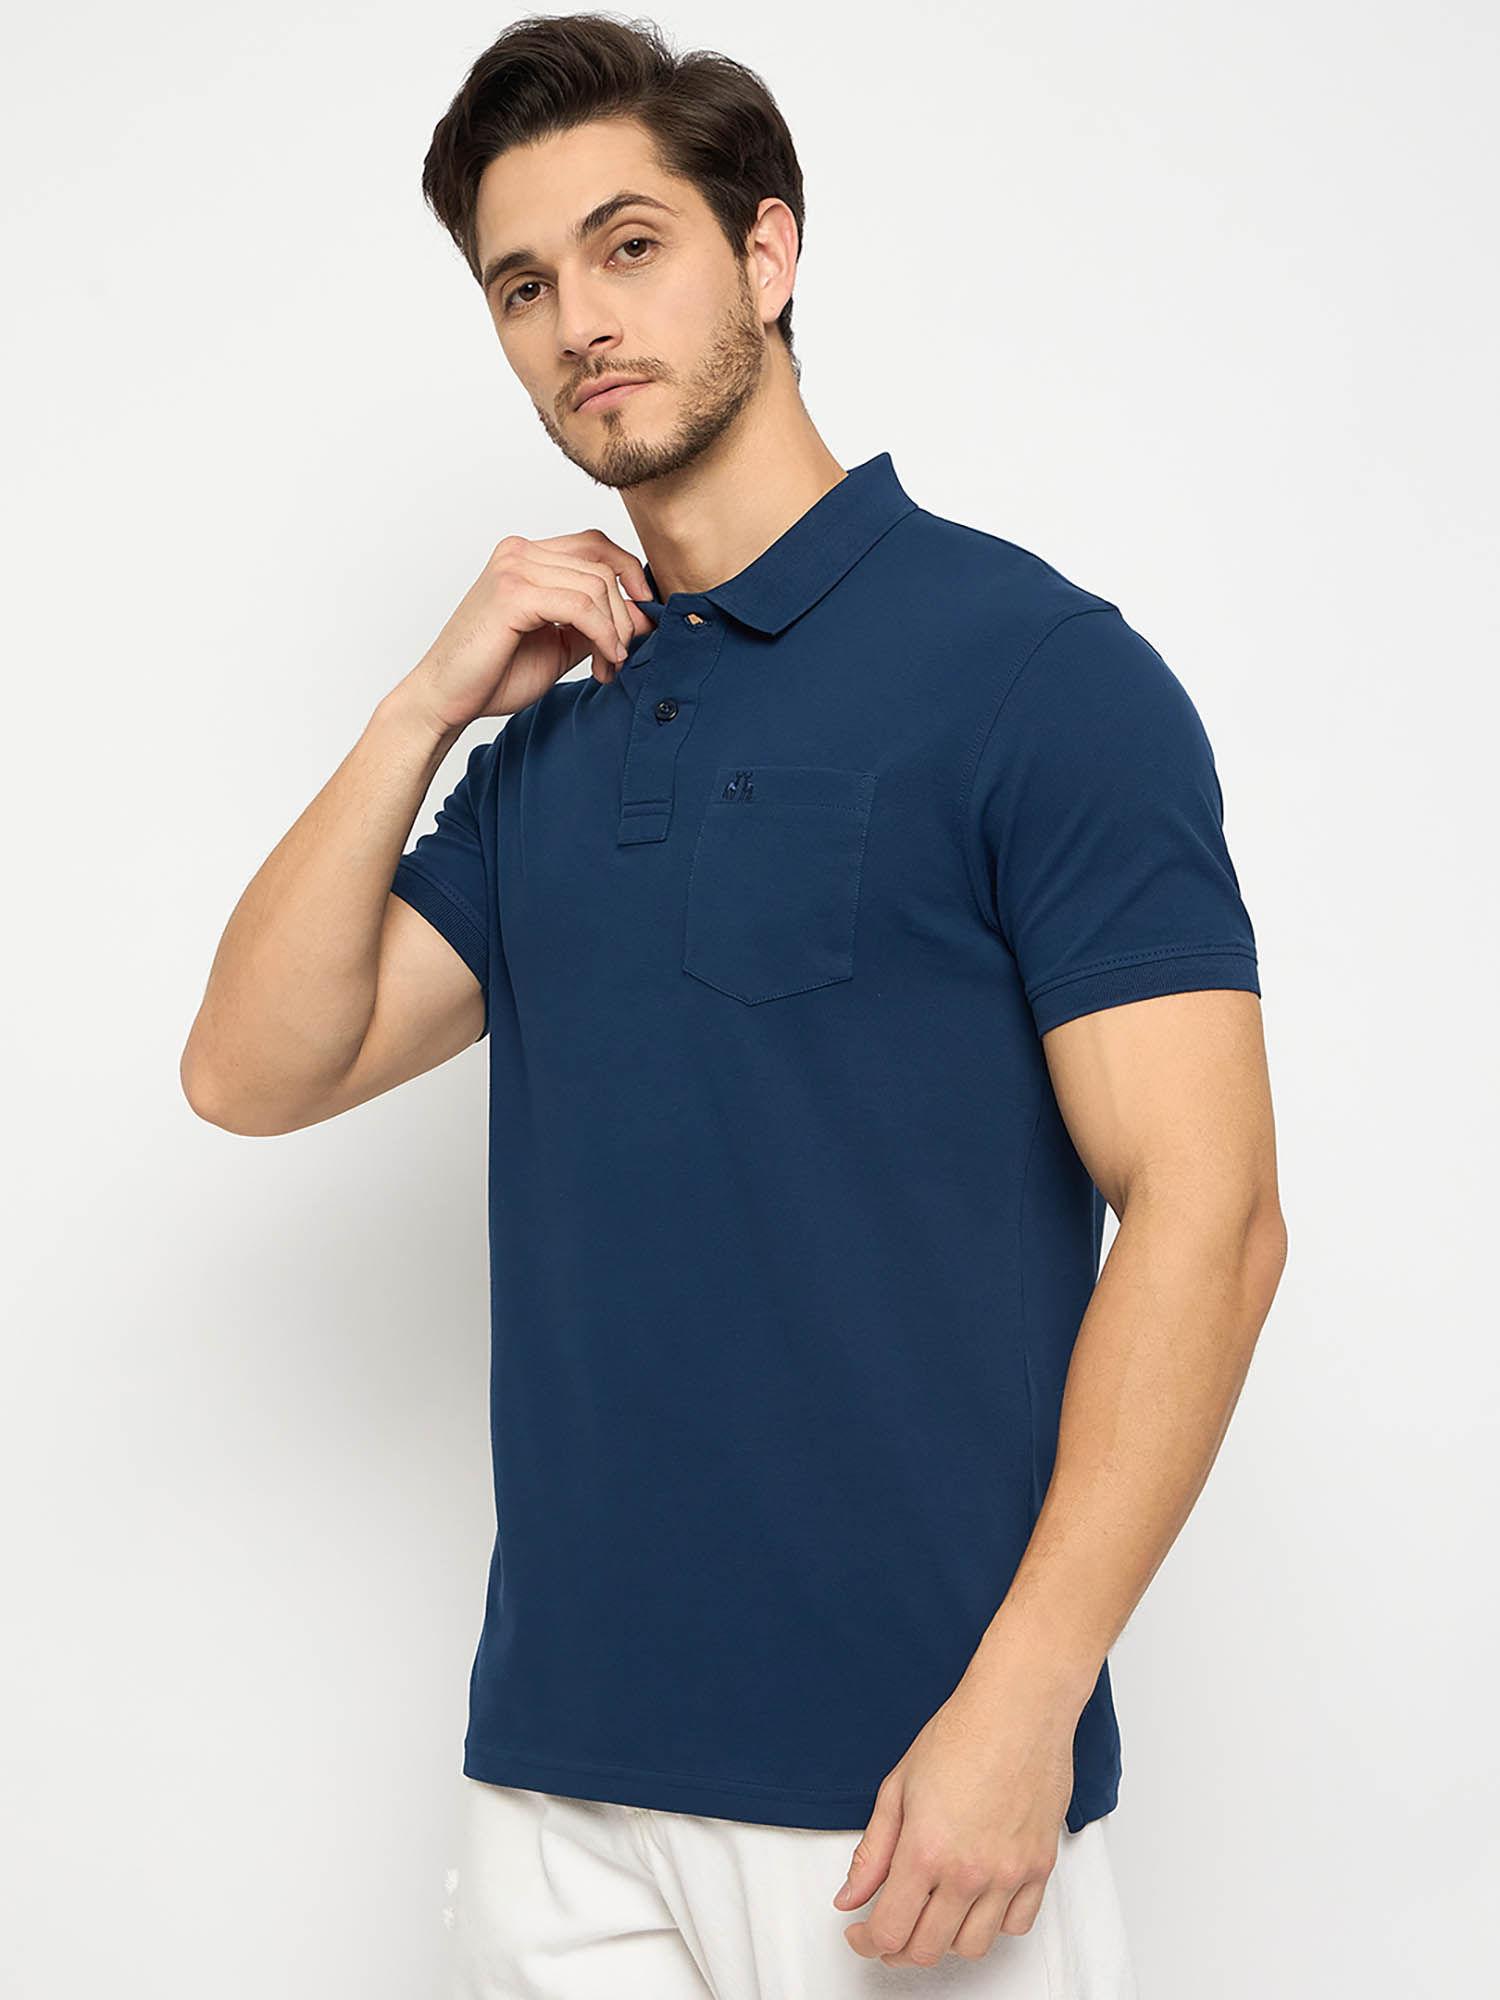 mens half sleeves blue polo t-shirt